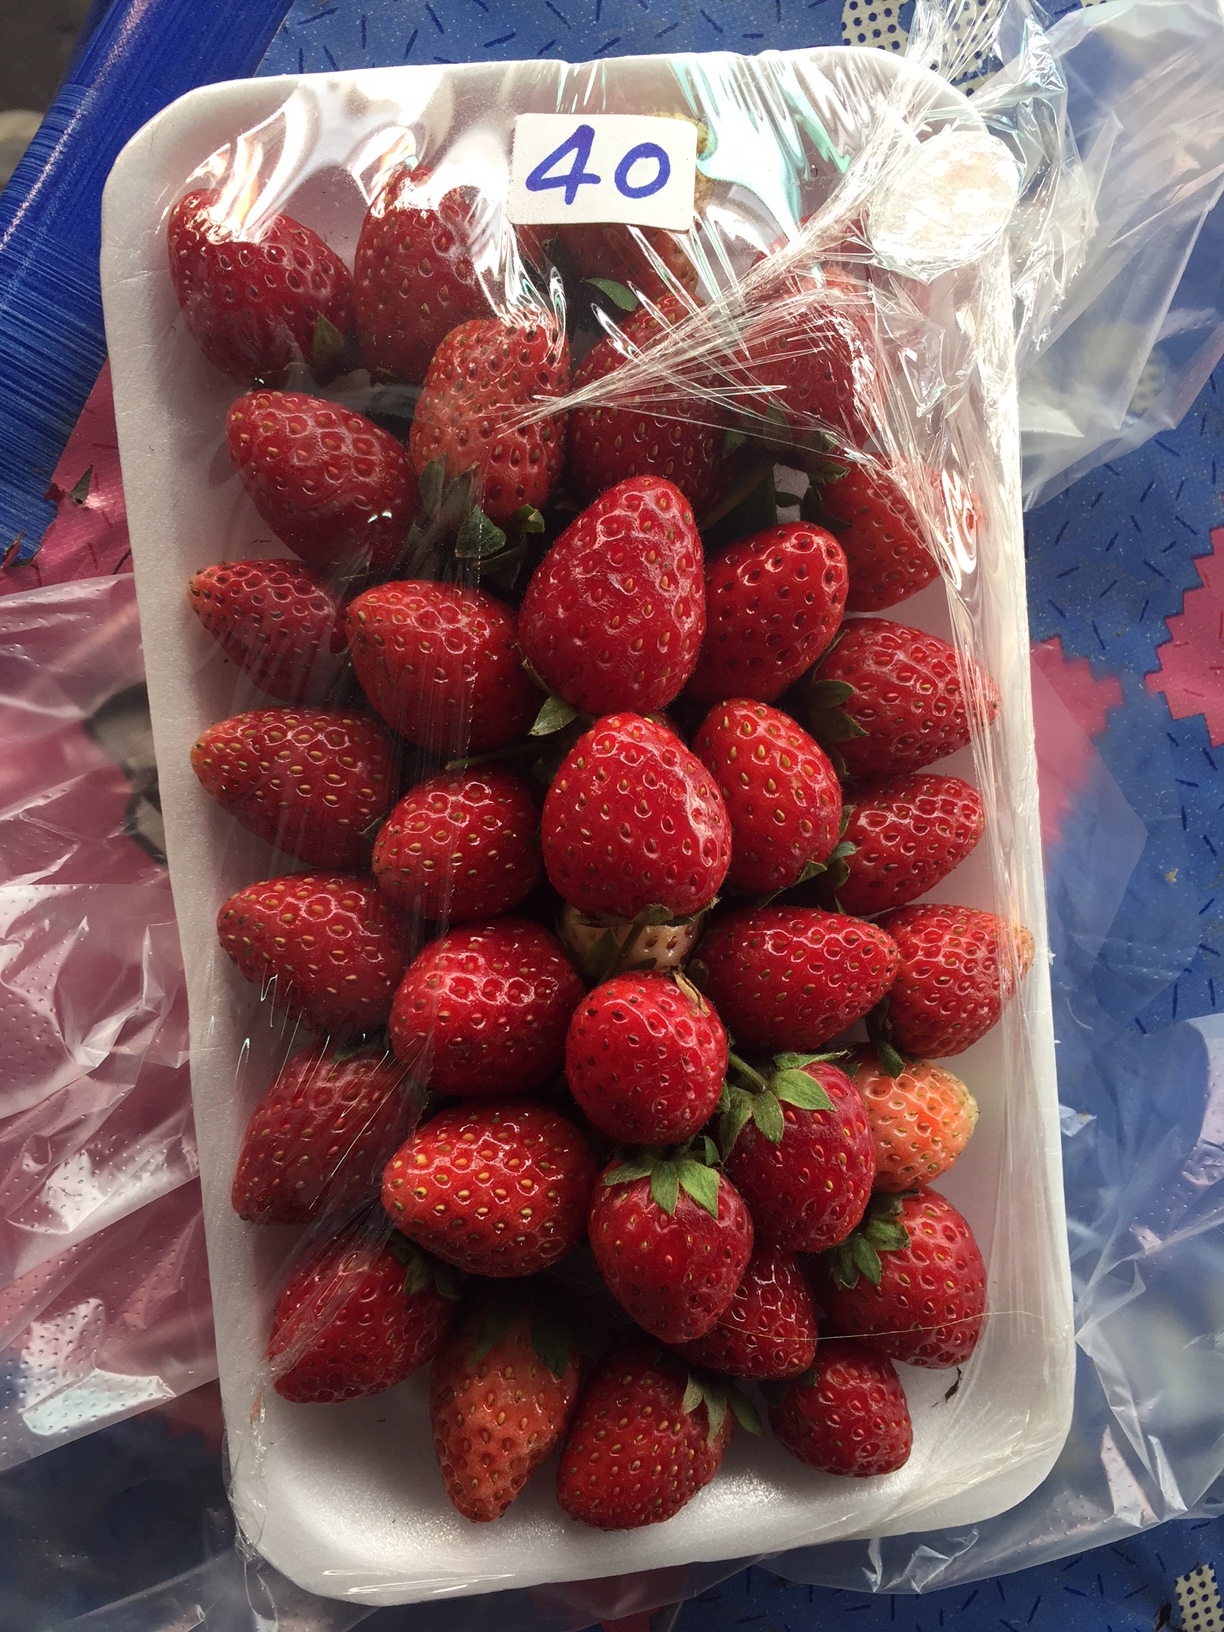 Strawberry (I know, not very weird)